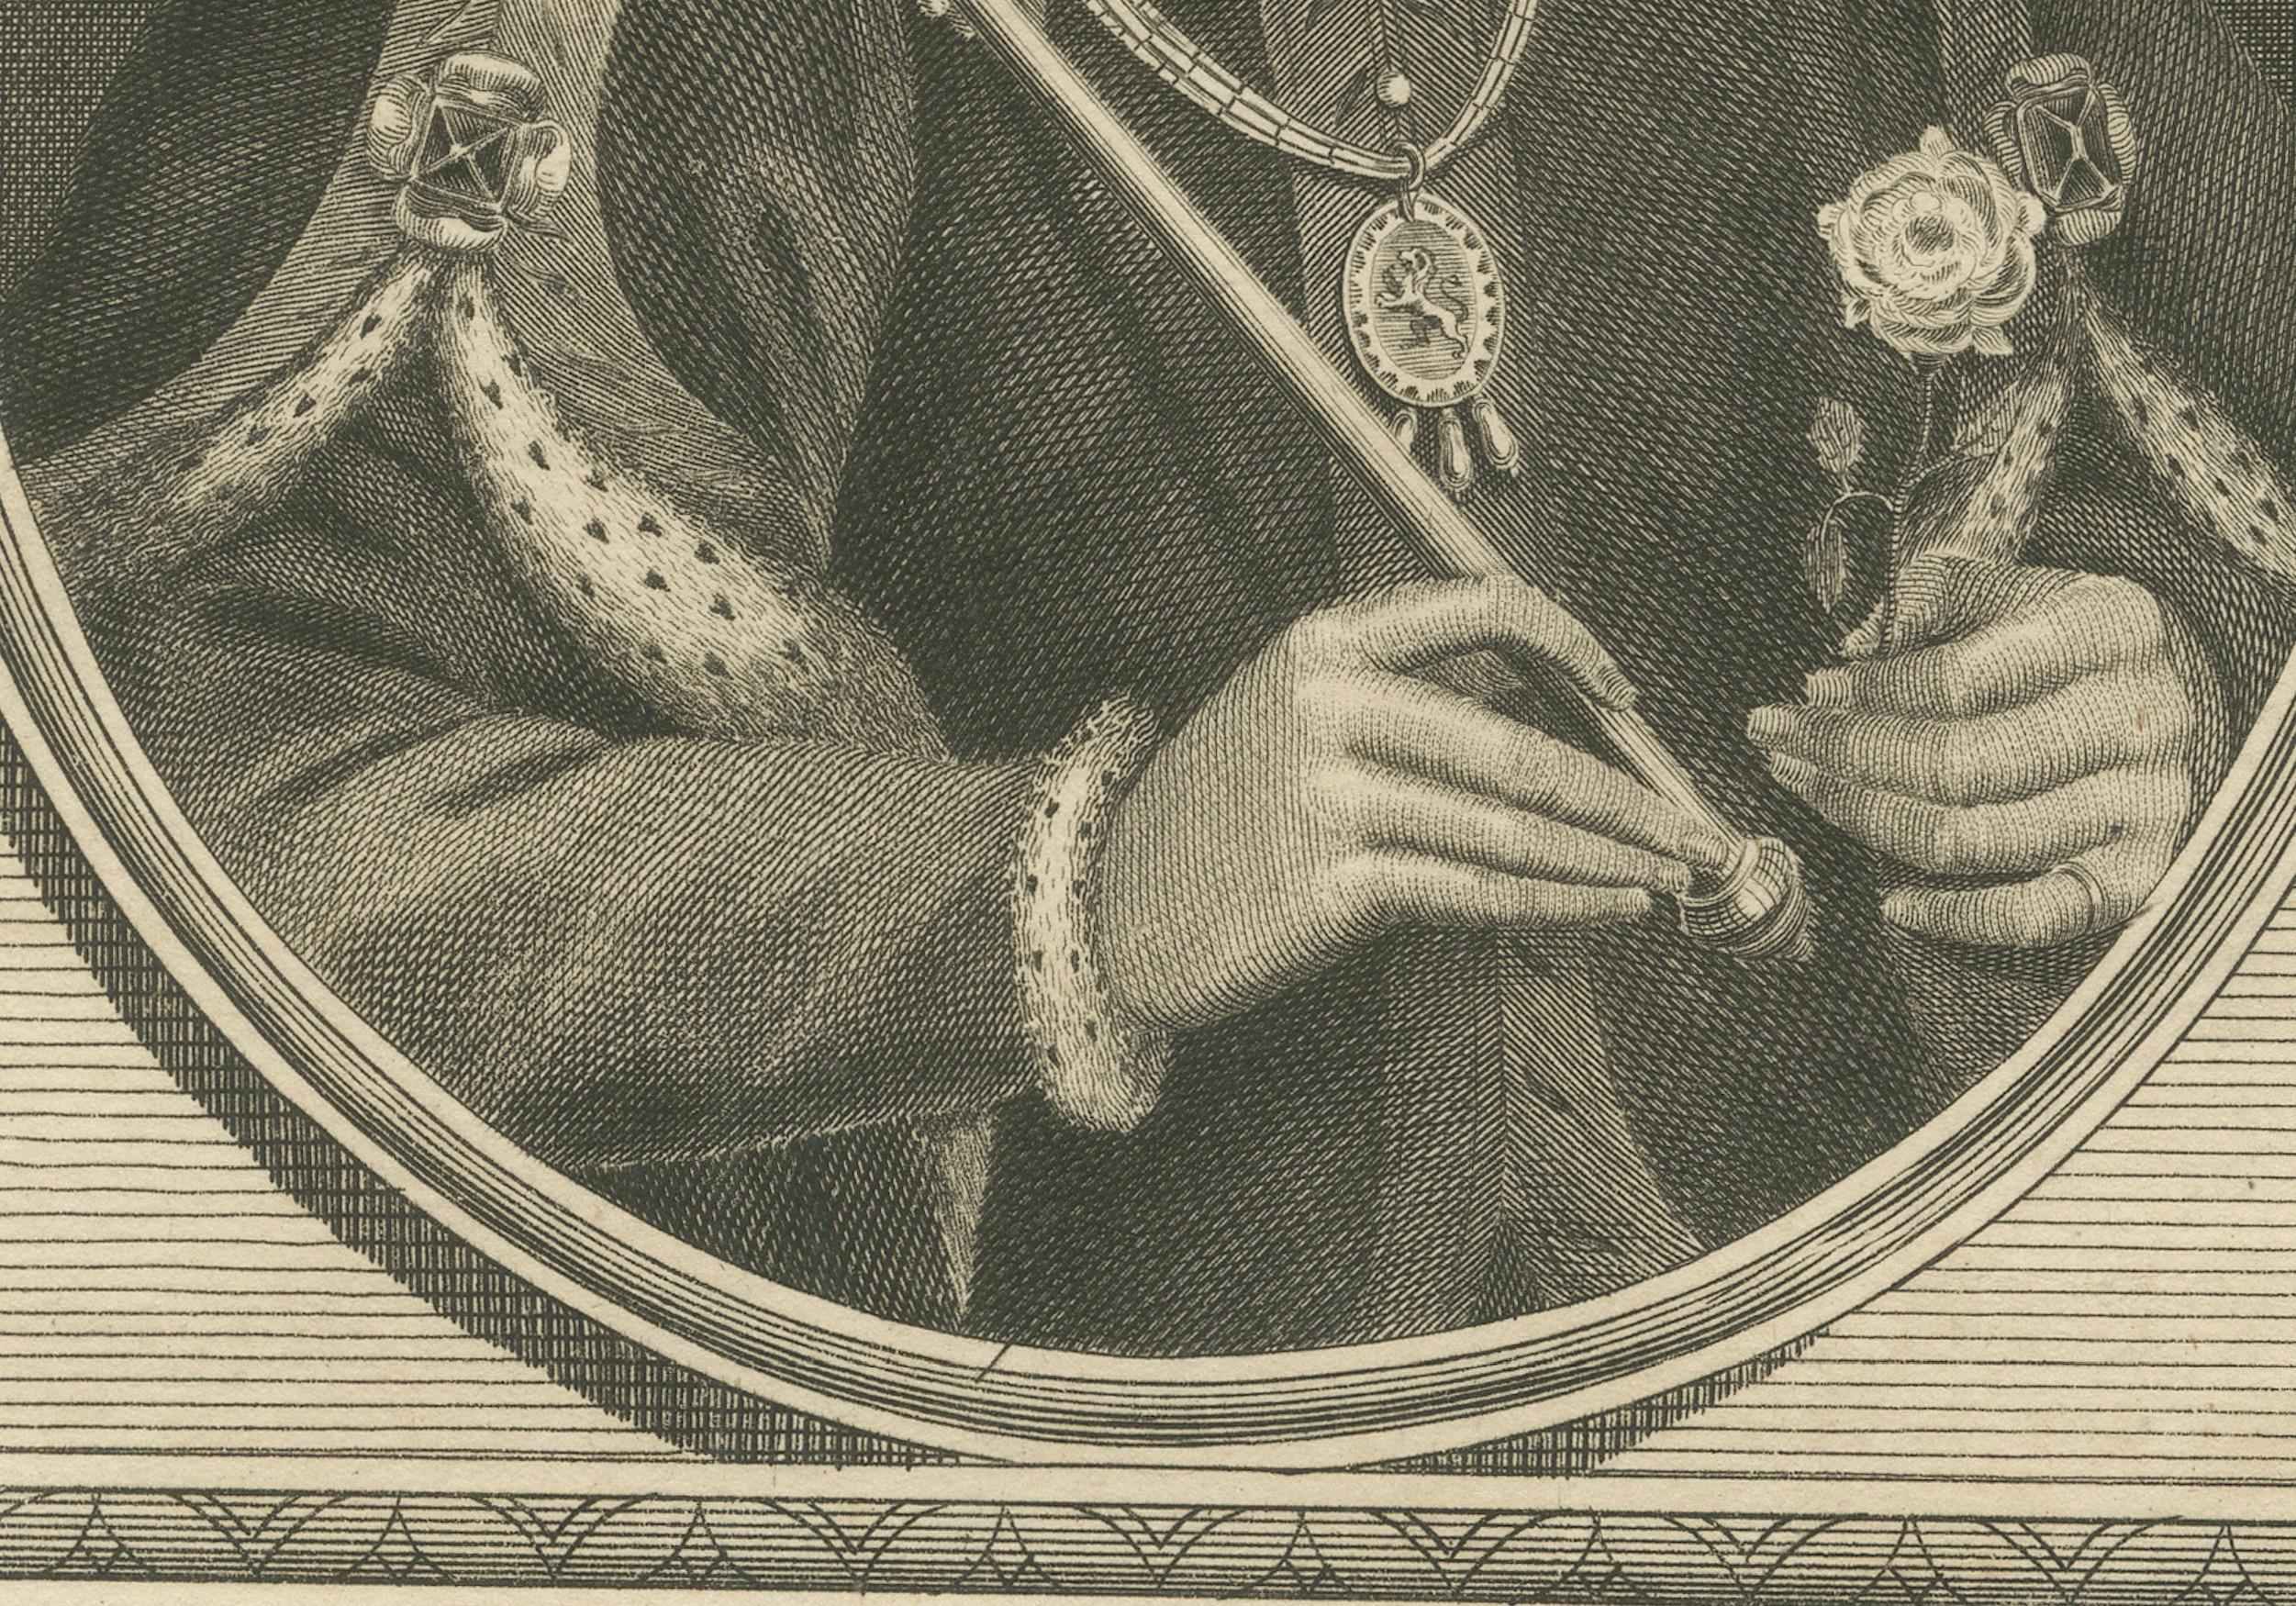 Paper 1787 Engraved Portrait of King Henry IV - Lancastrian Sovereign For Sale